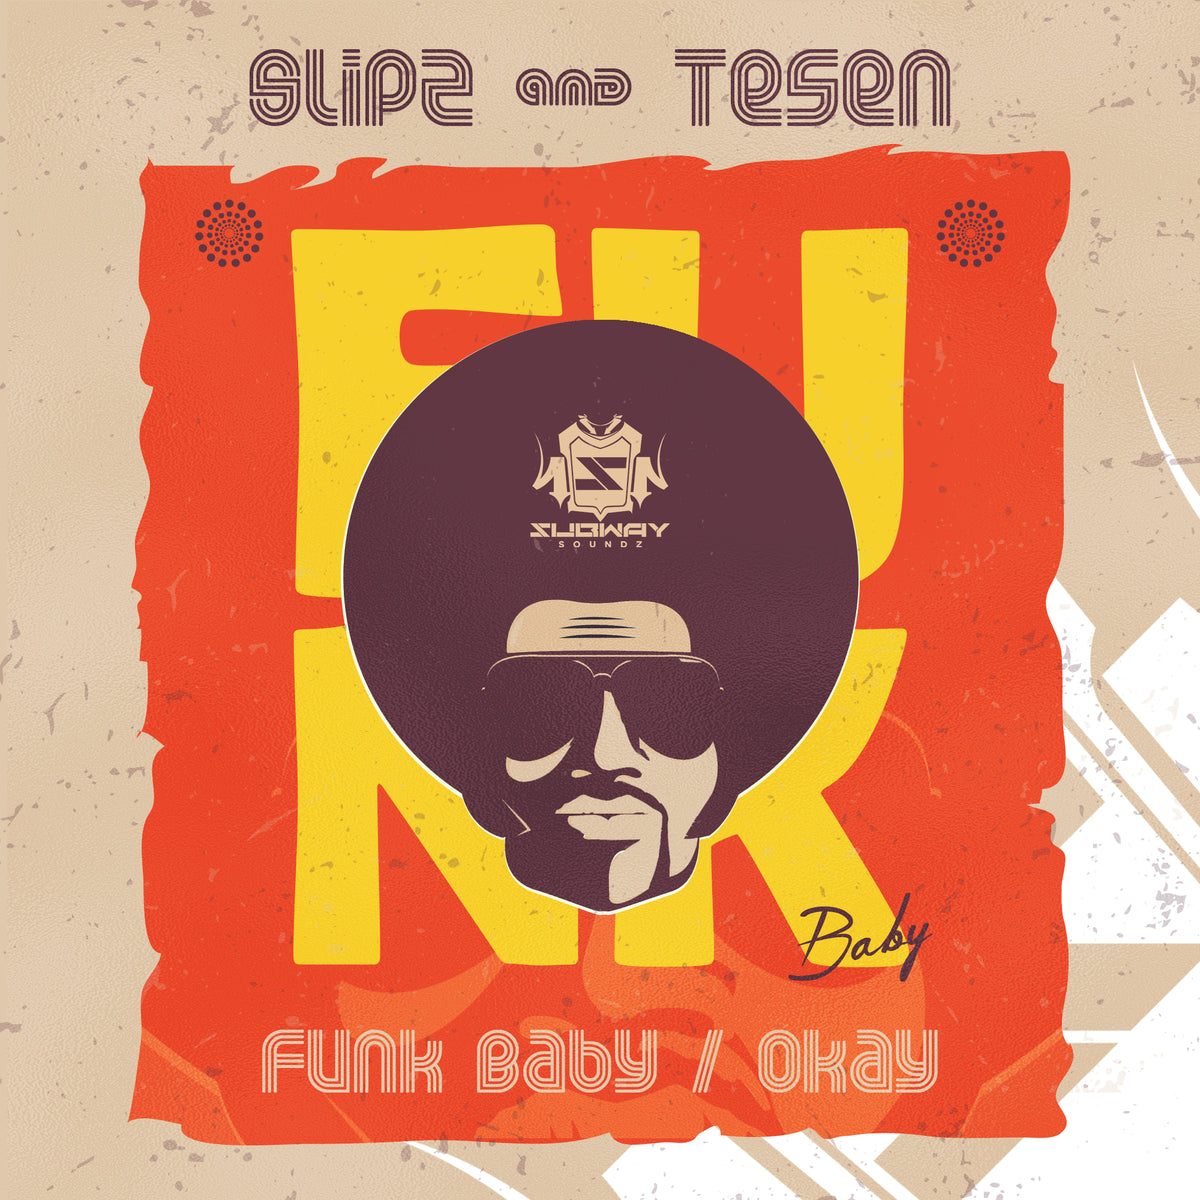 SSLD 043 - Slipz & Tesen 'Funk Baby' | 'Okay'